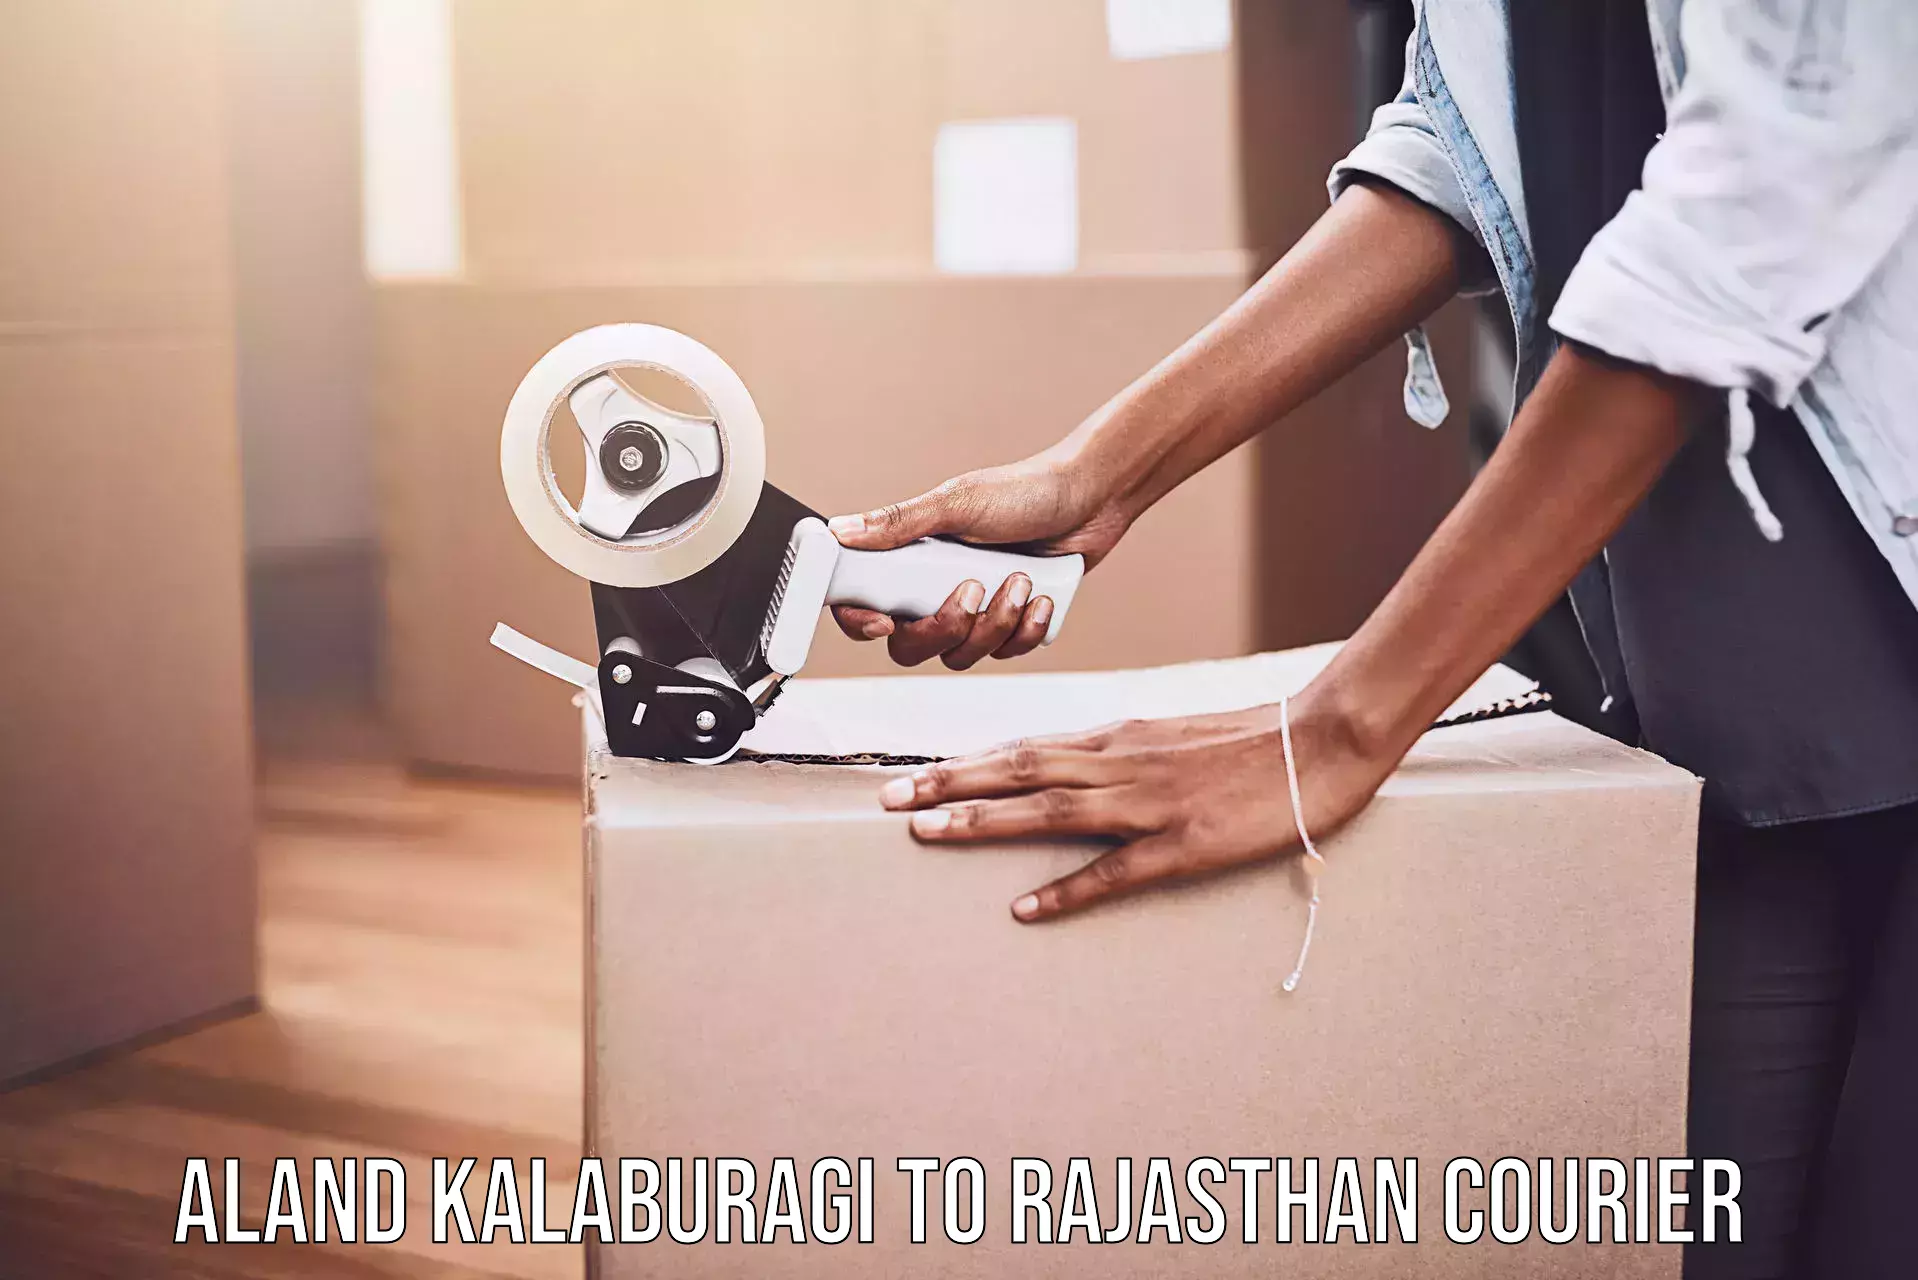 Nationwide delivery network Aland Kalaburagi to Rajasthan